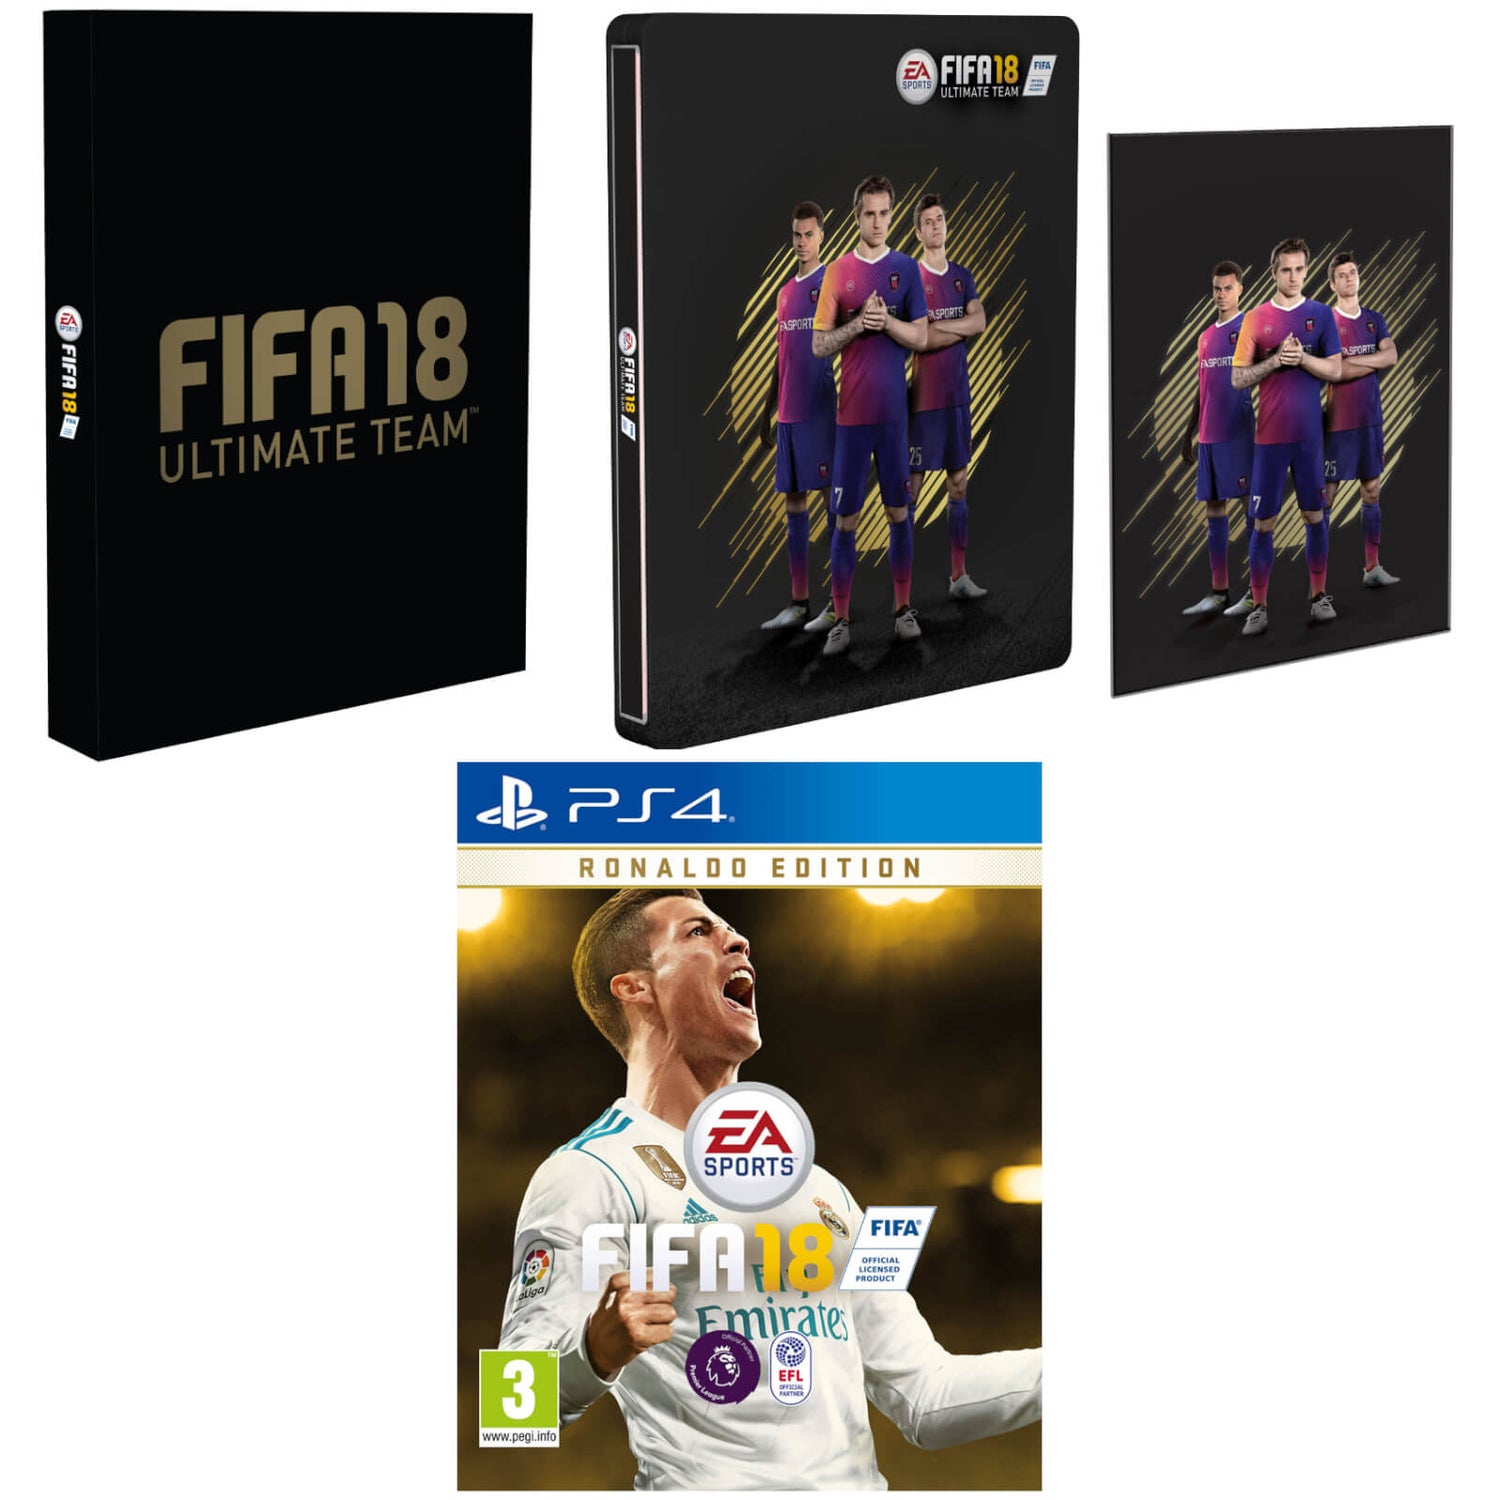 FIFA 18 - Ronaldo Edition With Exclusive Steelbook and Artcard